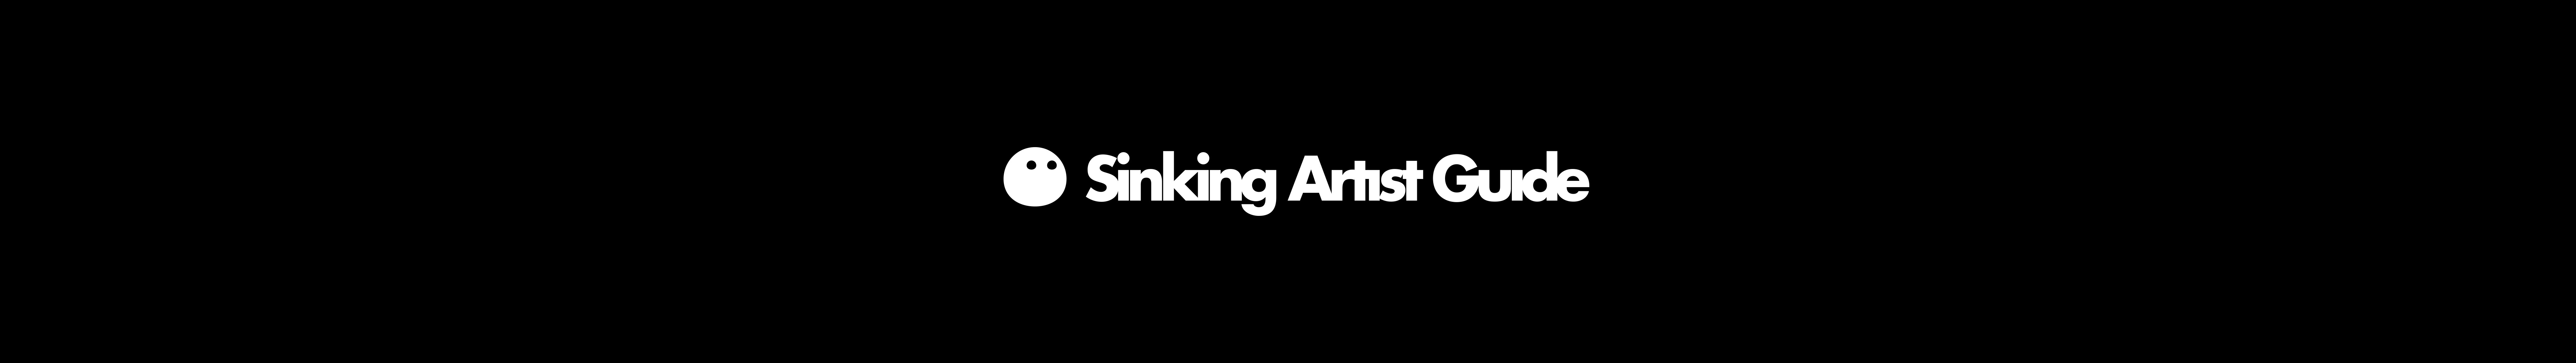 Sinking Artist Guide 插画师自救指南's profile banner